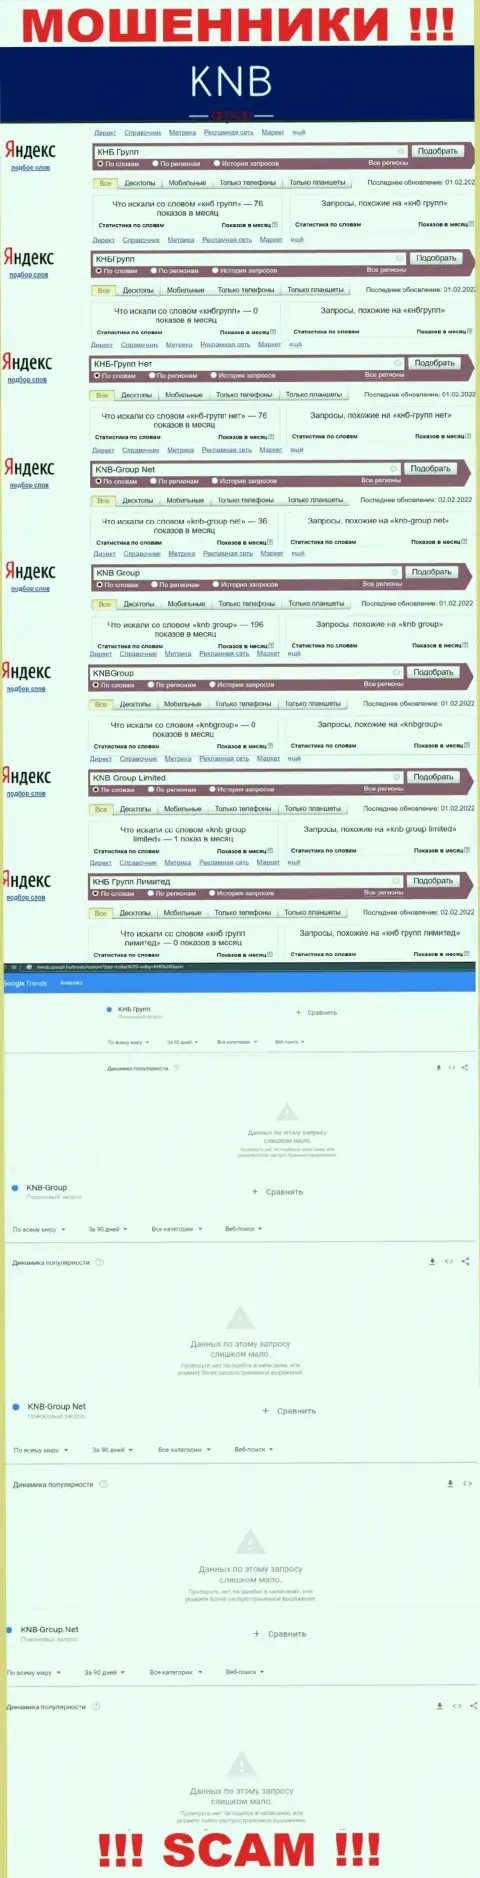 Скриншот статистики онлайн запросов по противозаконно действующей конторе KNB Group Limited